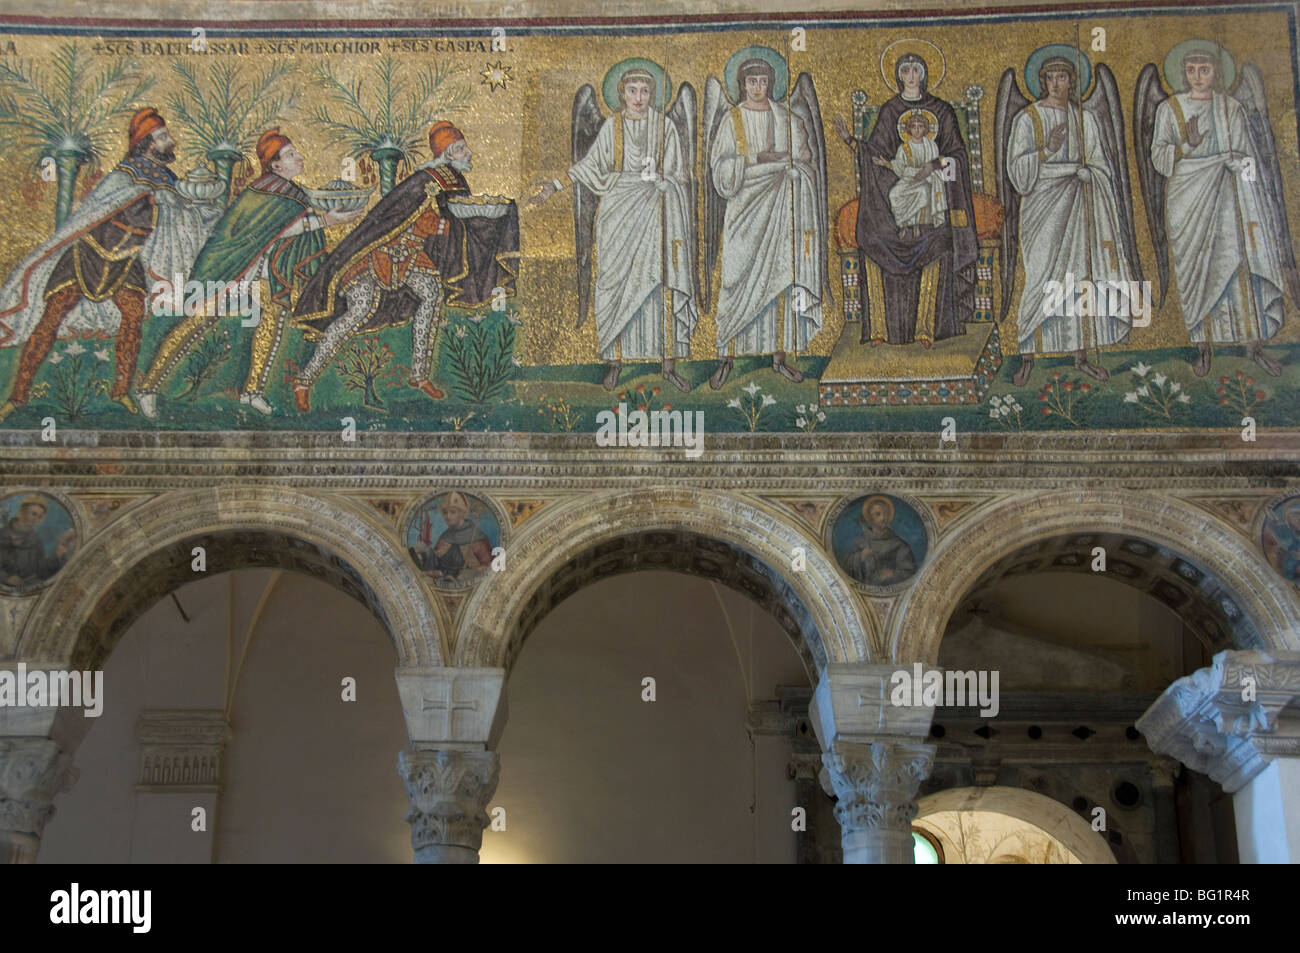 Mosaic depicting Three Kings bringing gifts to the Holy Child, Basilica di Sant'Apollinare Nuovo, Ravenna, Emilia-Romagna, Italy Stock Photo